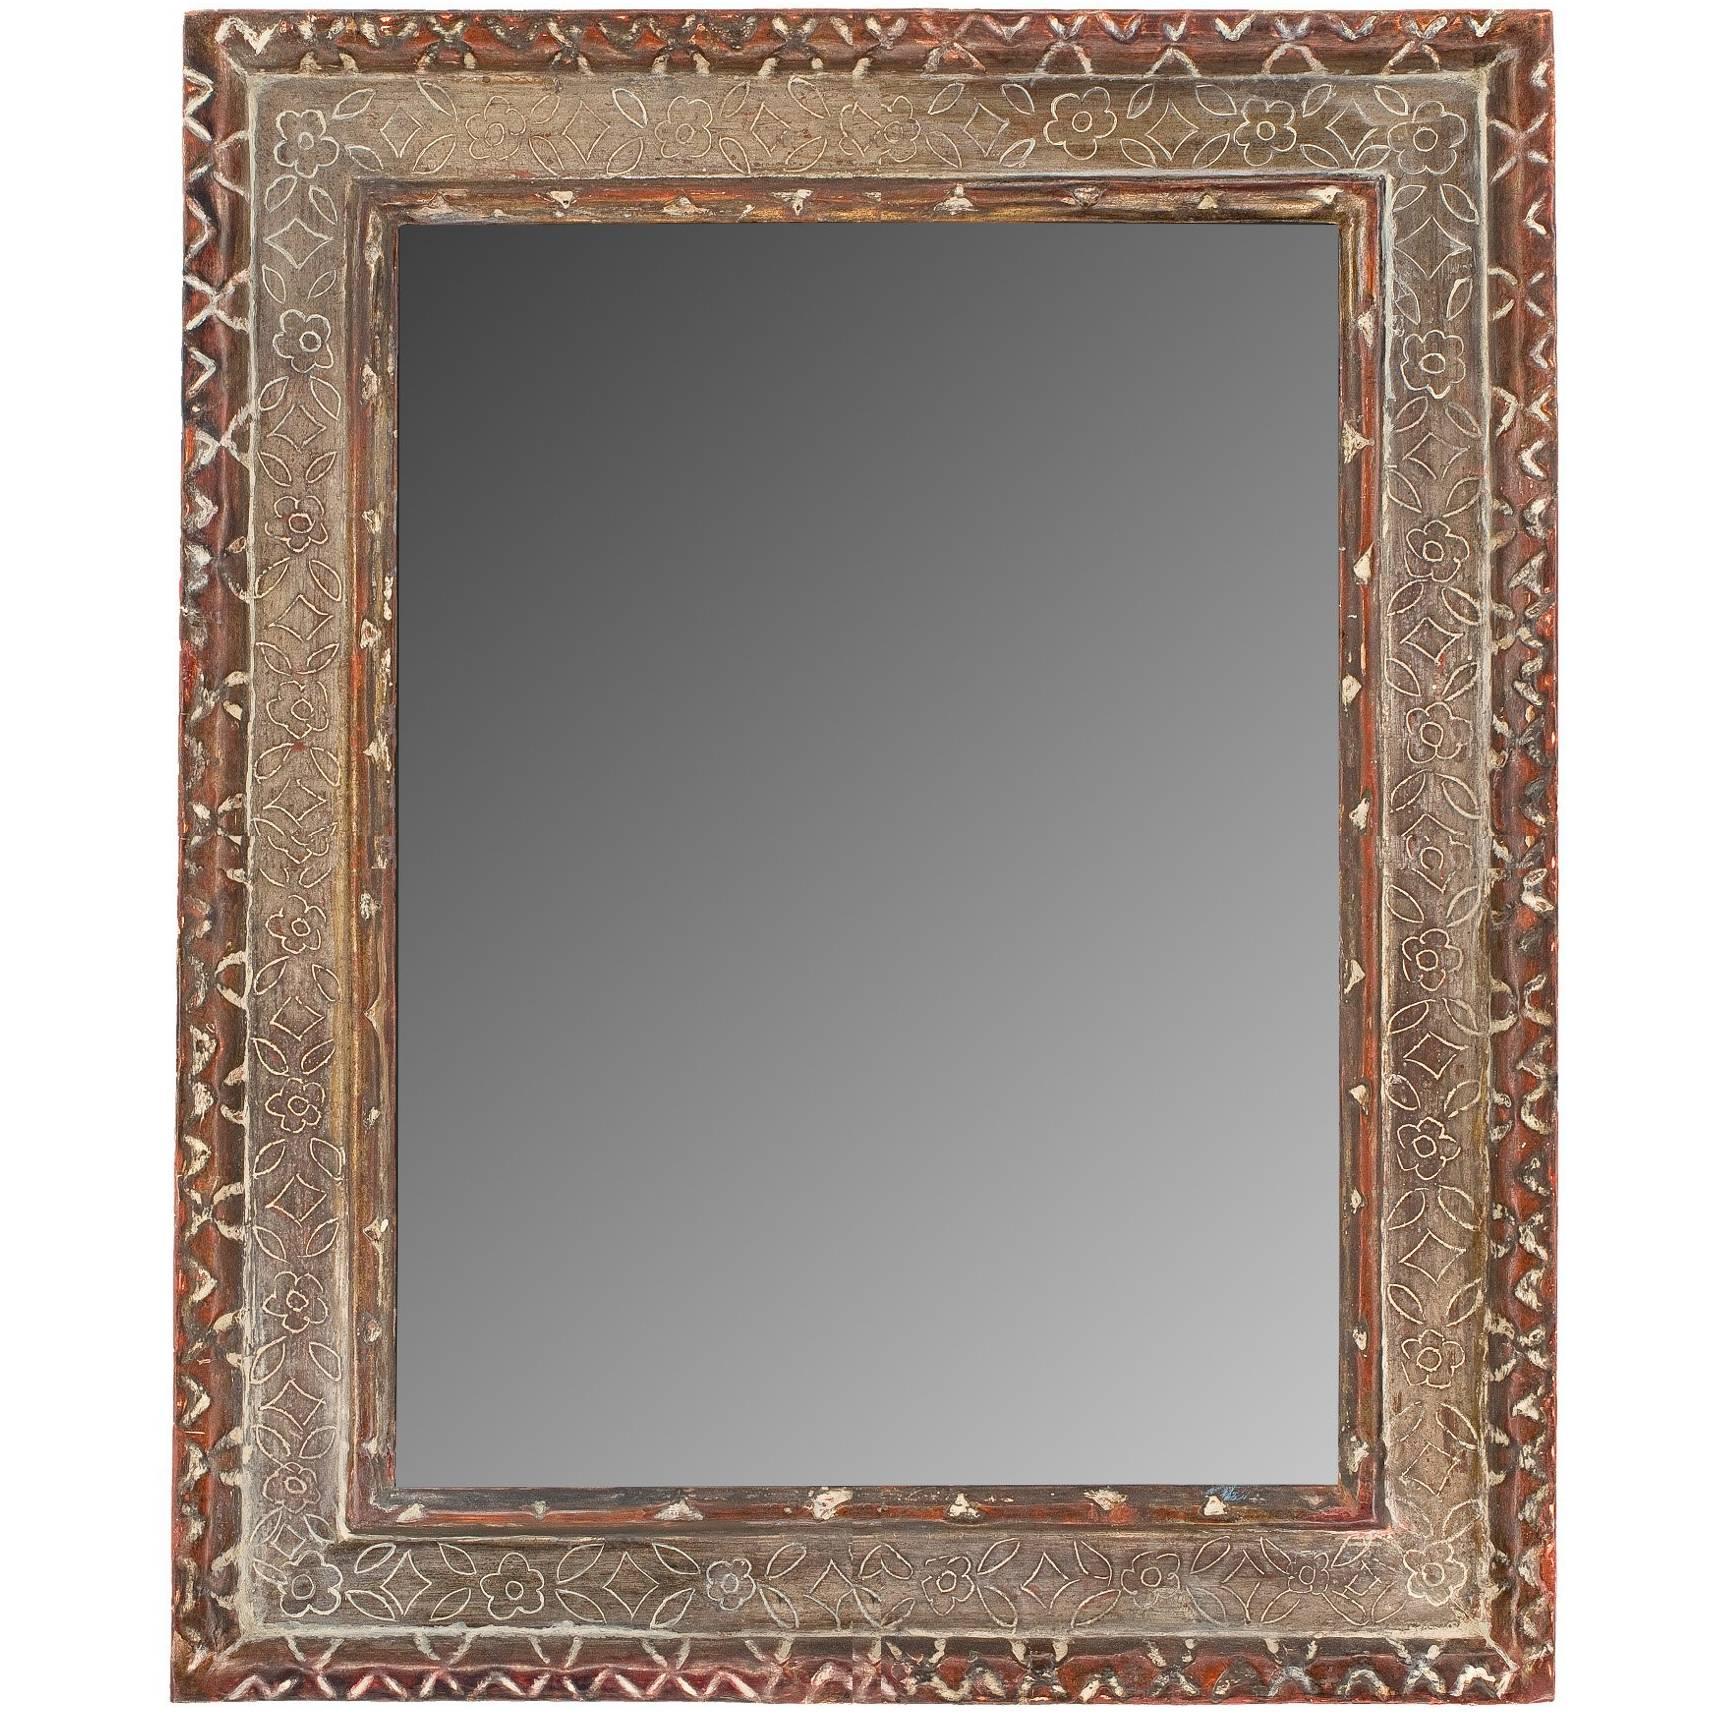 Prendergast Style Mirror For Sale